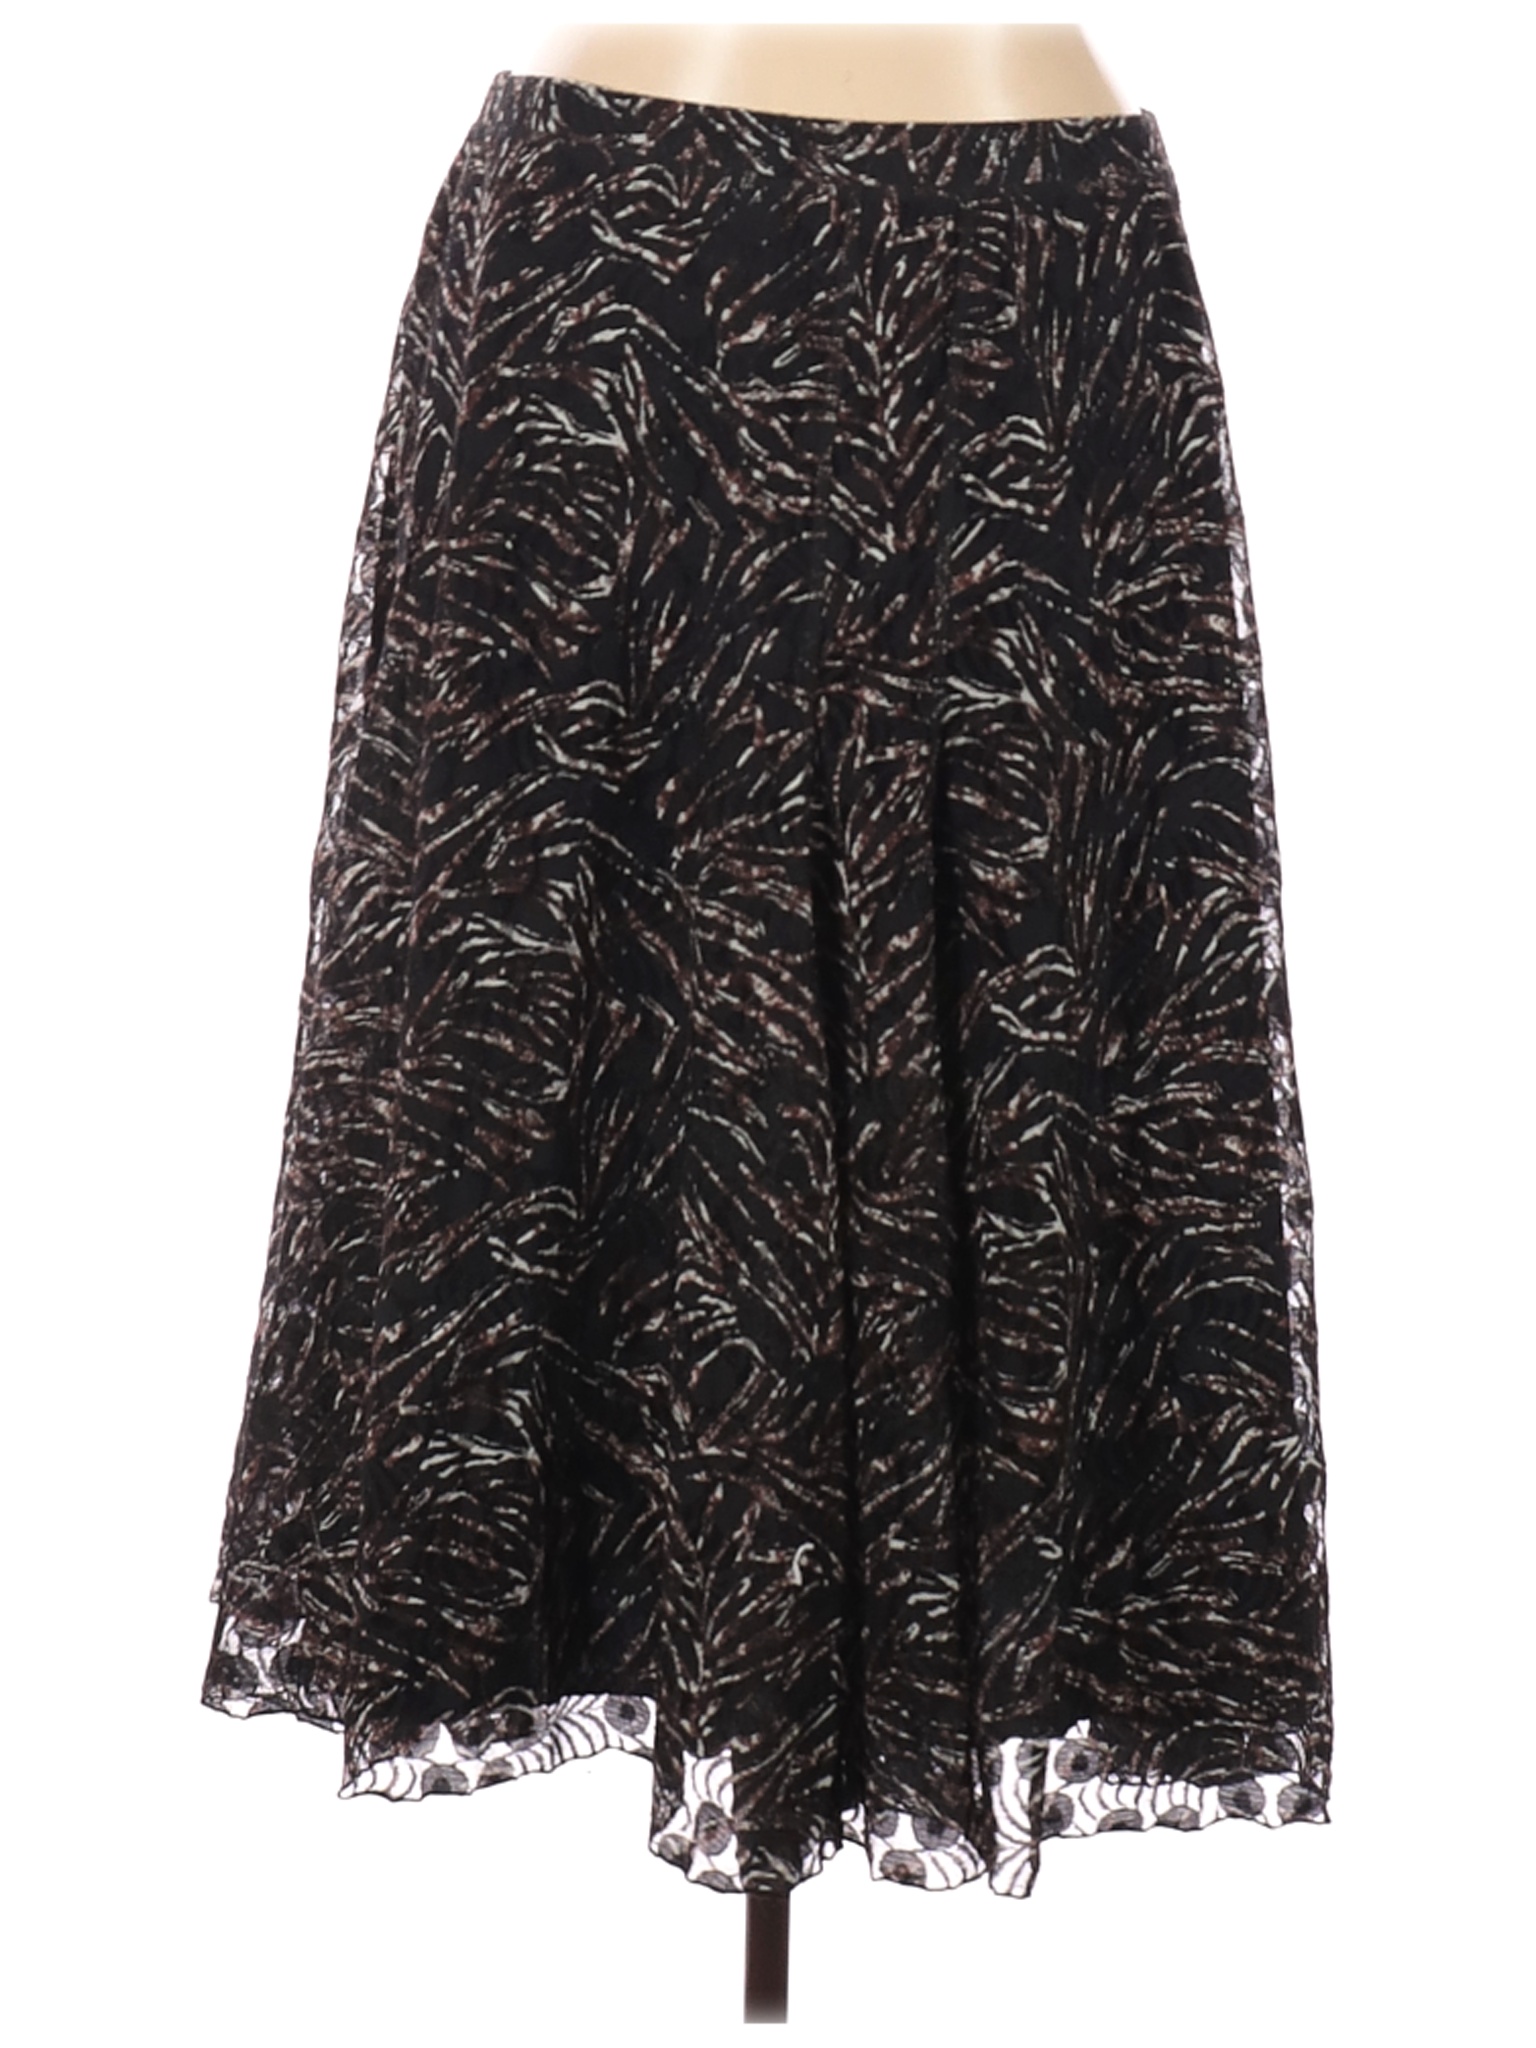 Coldwater Creek Women Black Casual Skirt 1X Plus | eBay